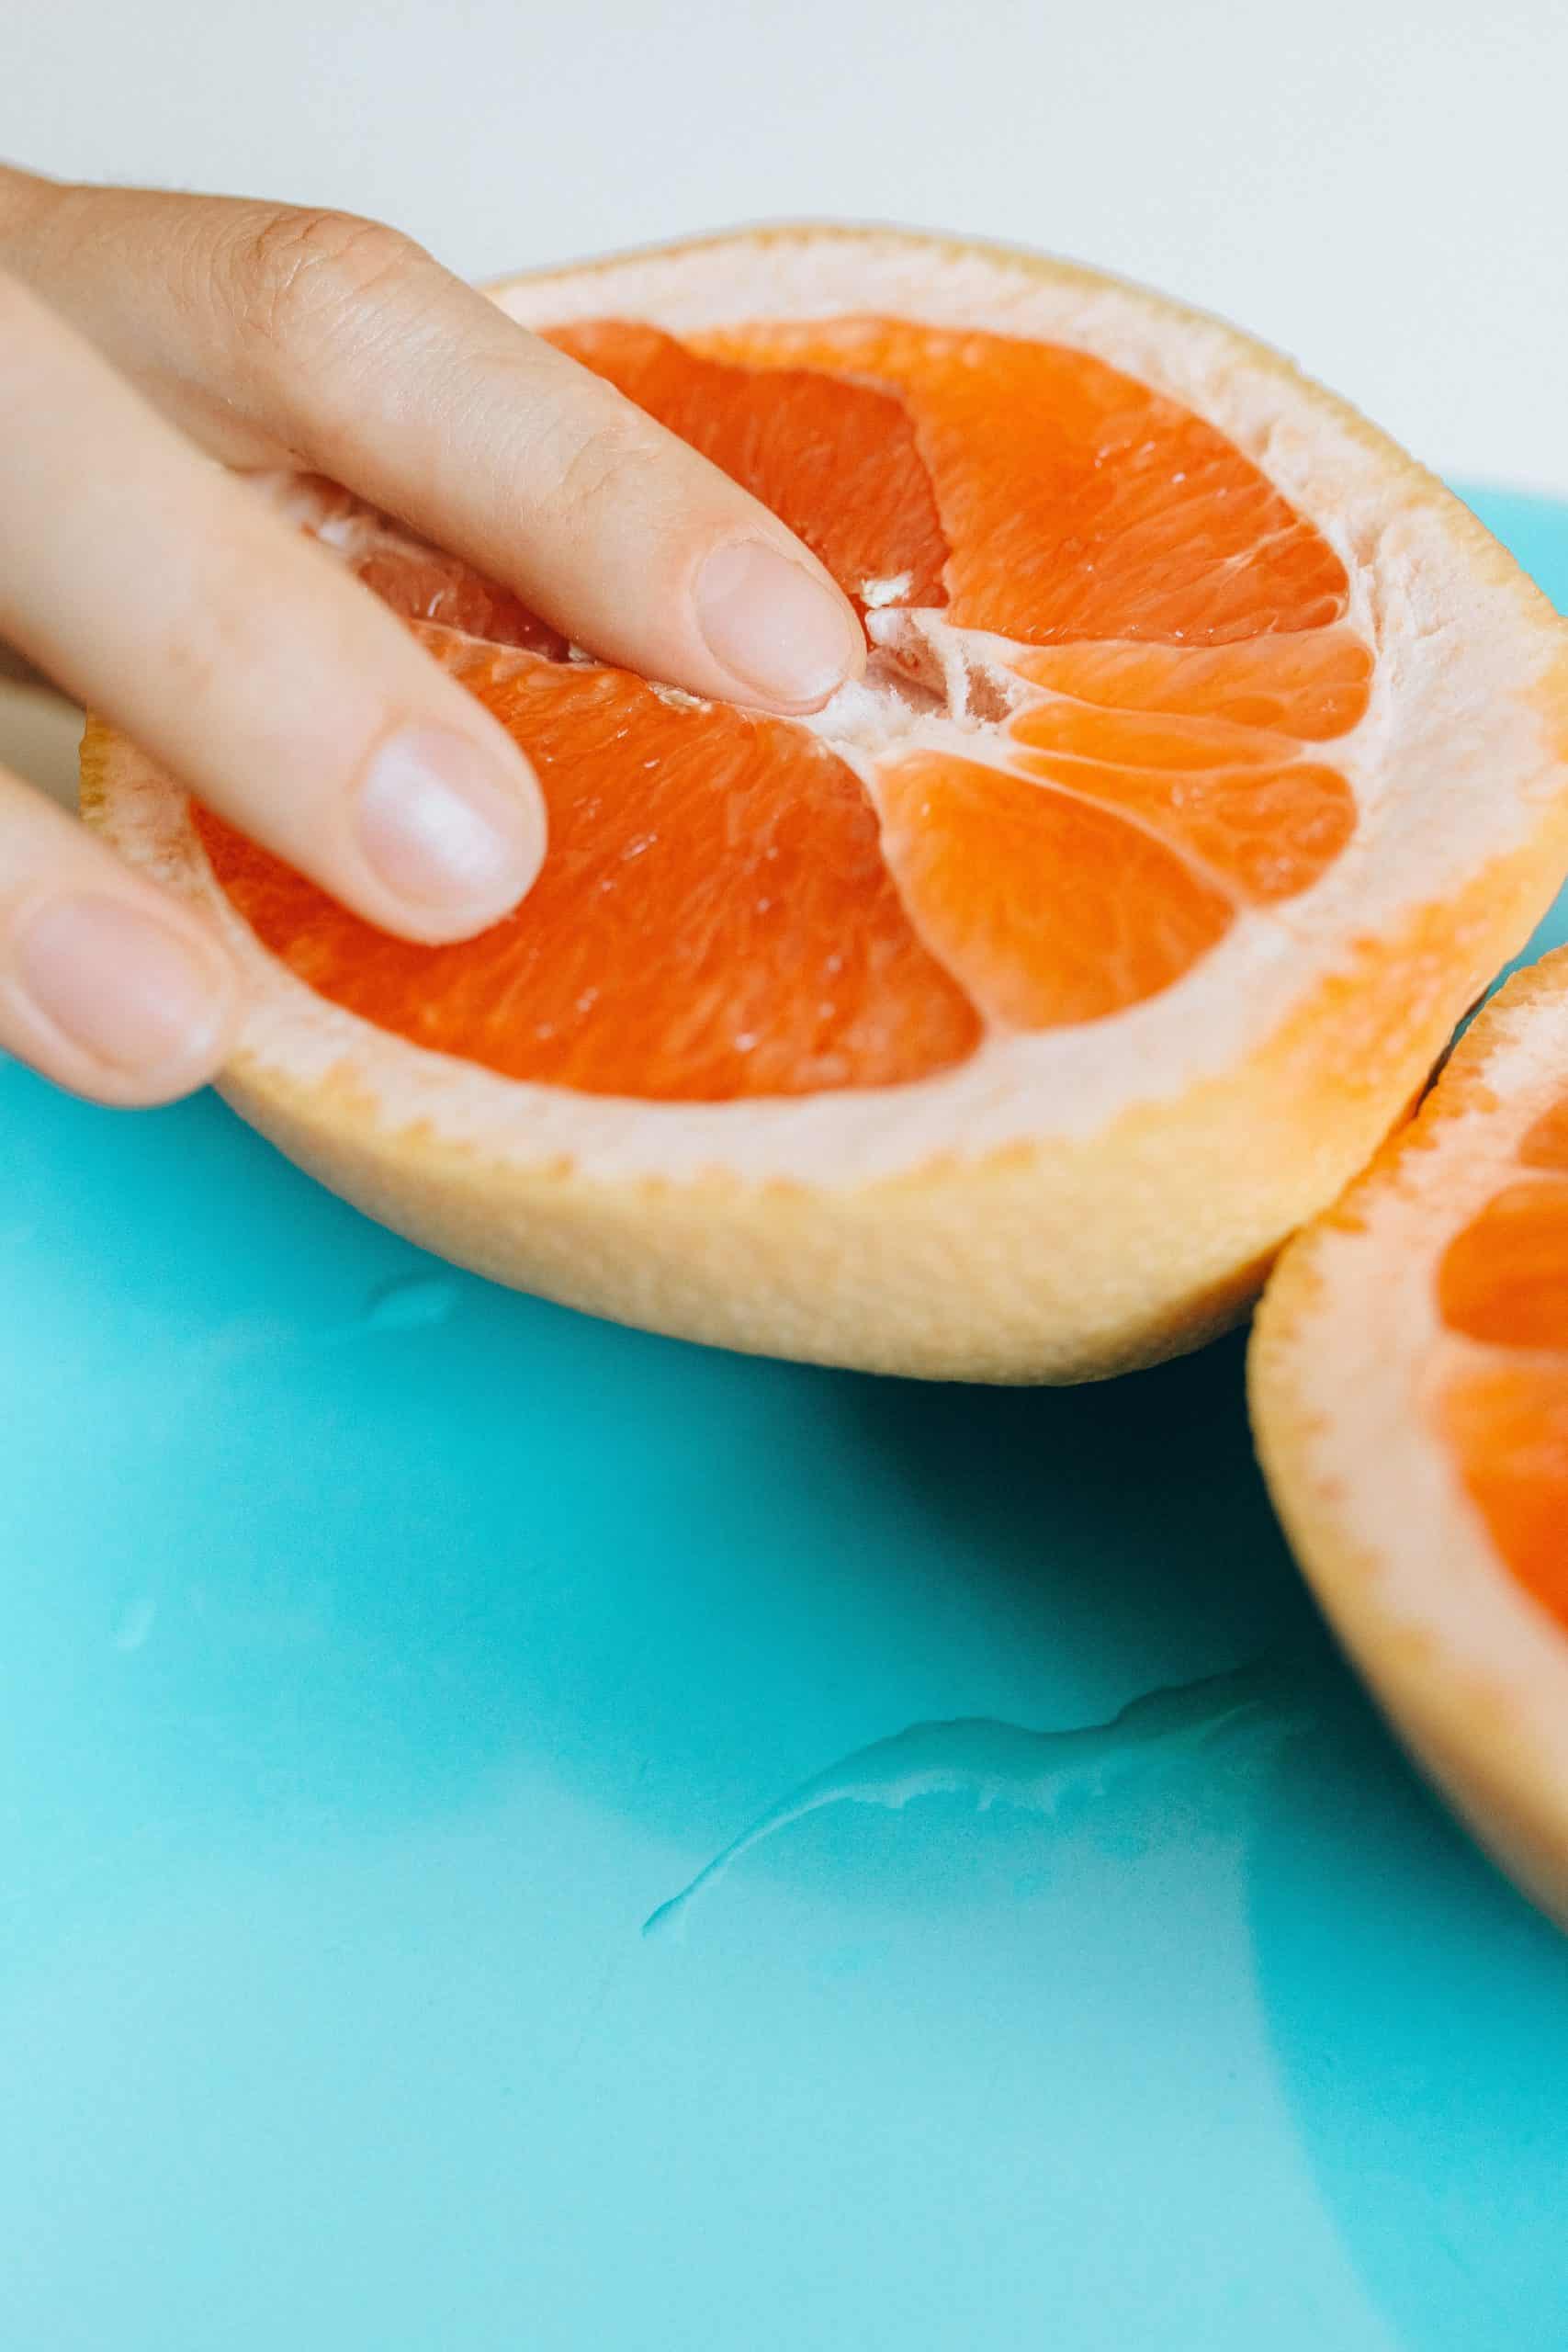 Finger in orange fruit as genital concept